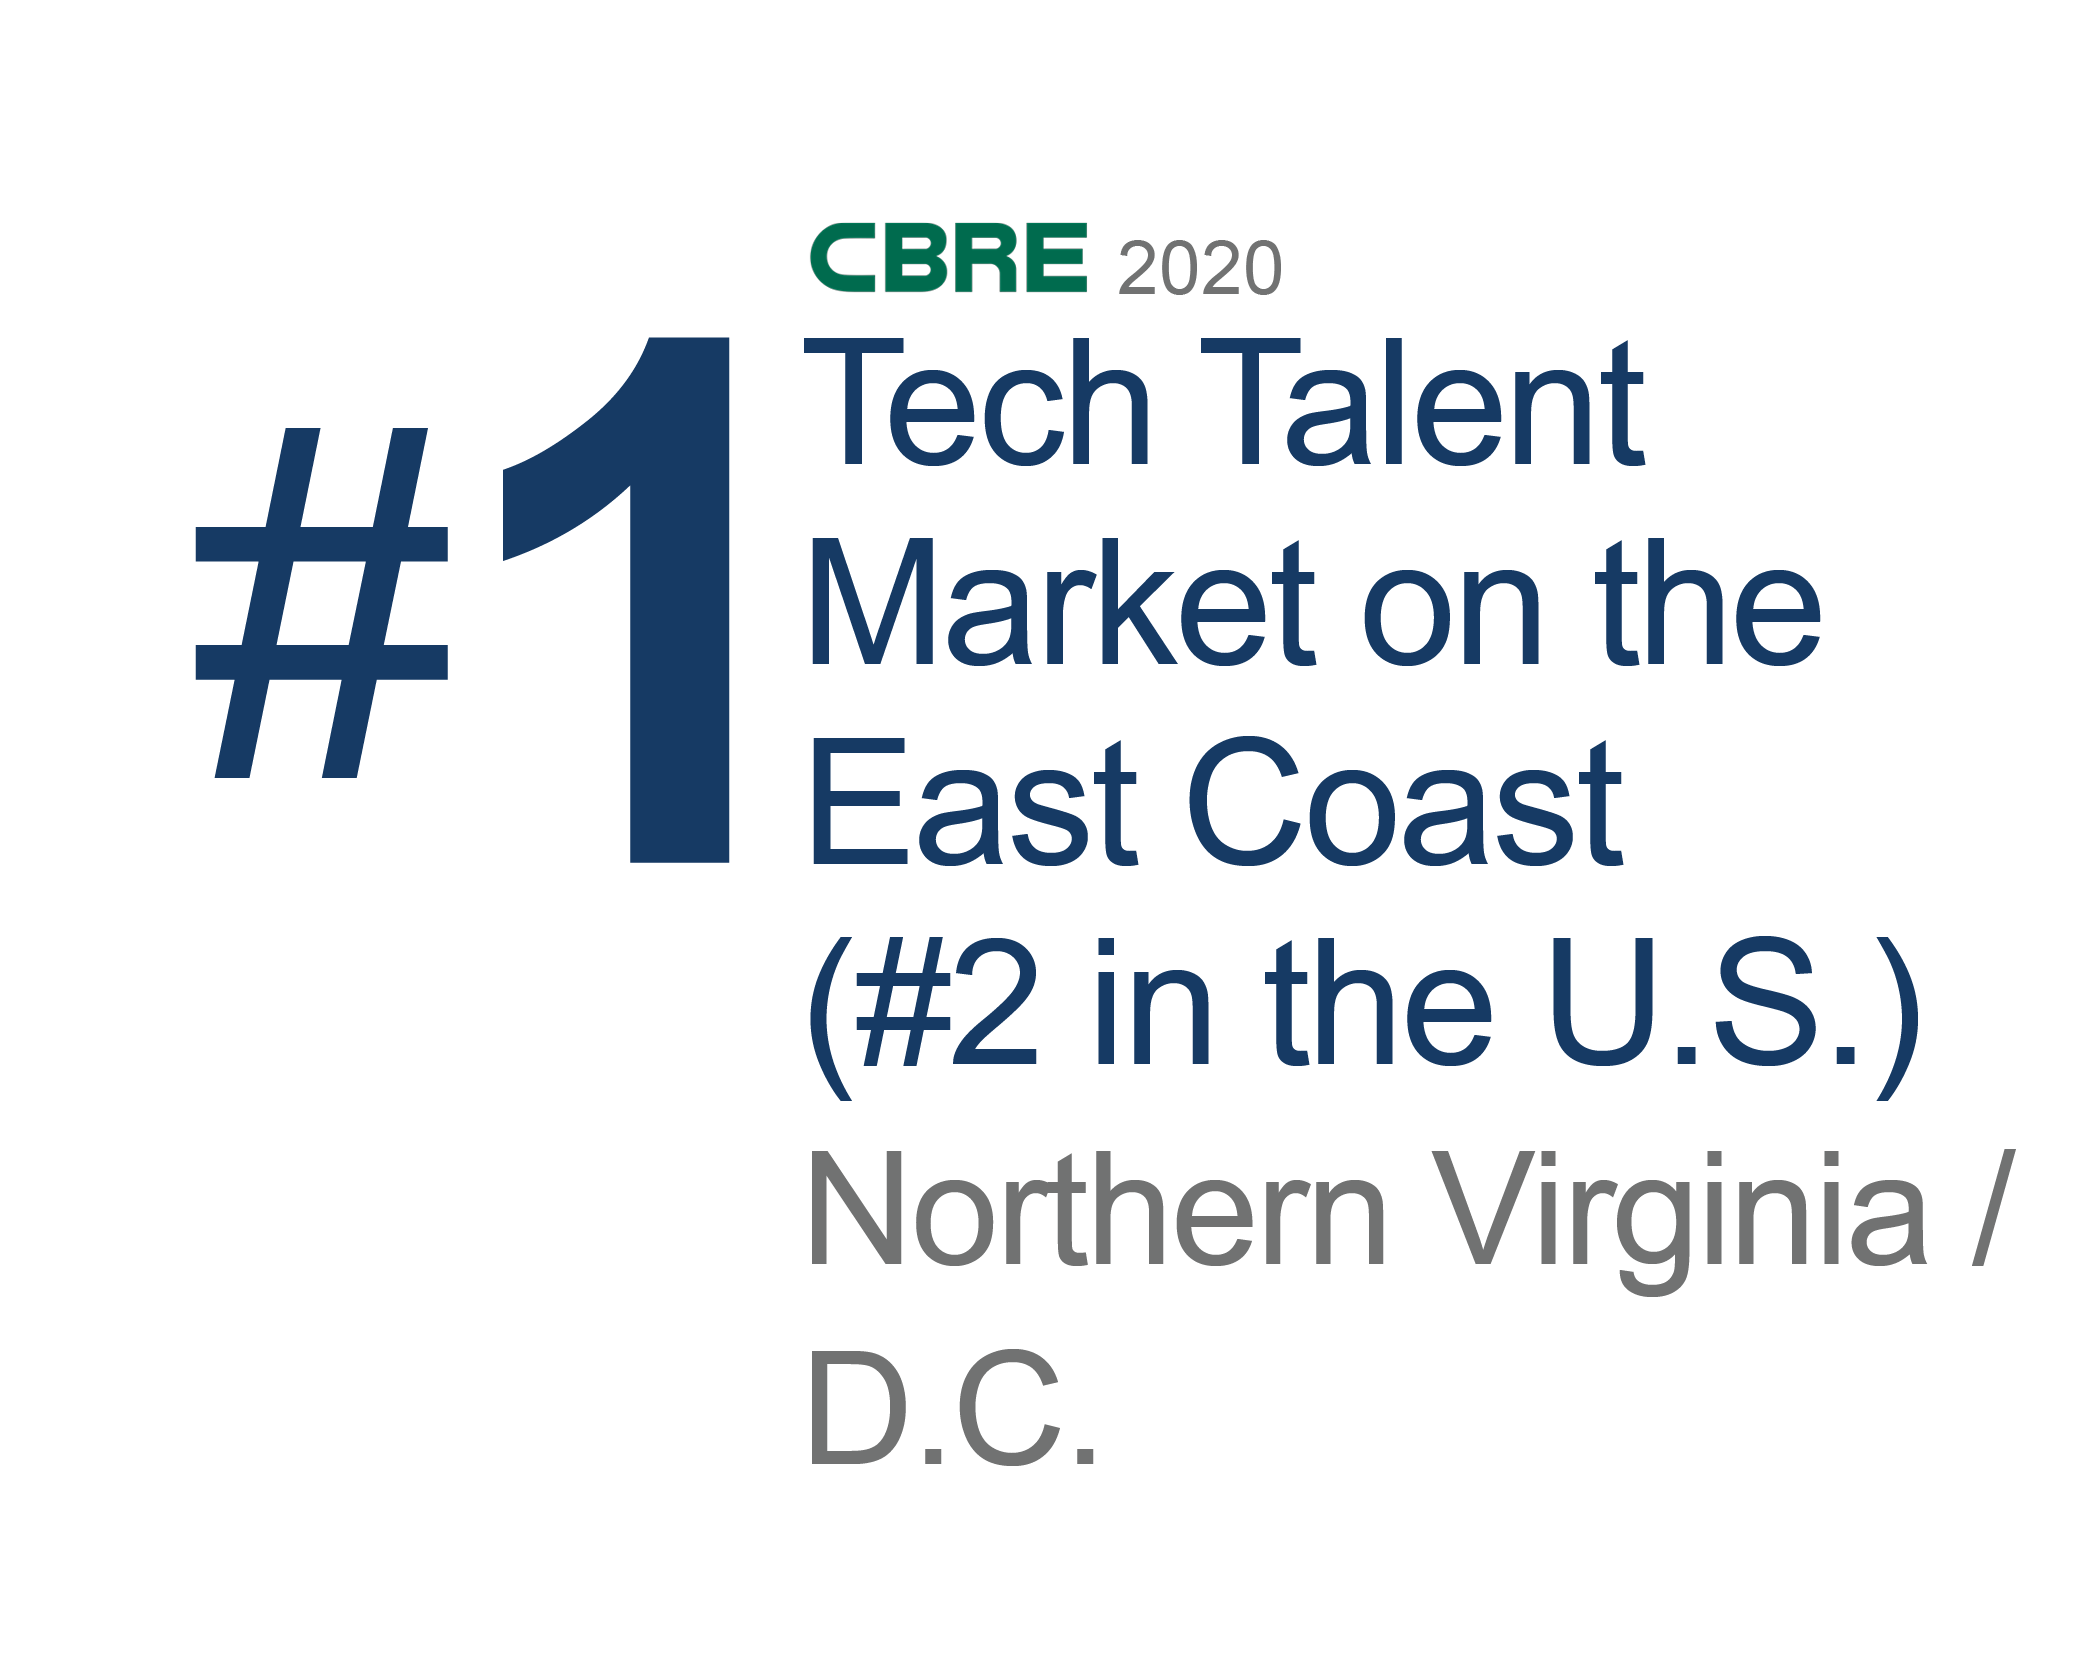 #1 Tech Talent Market on the East Coast (#2 in the U.S.)